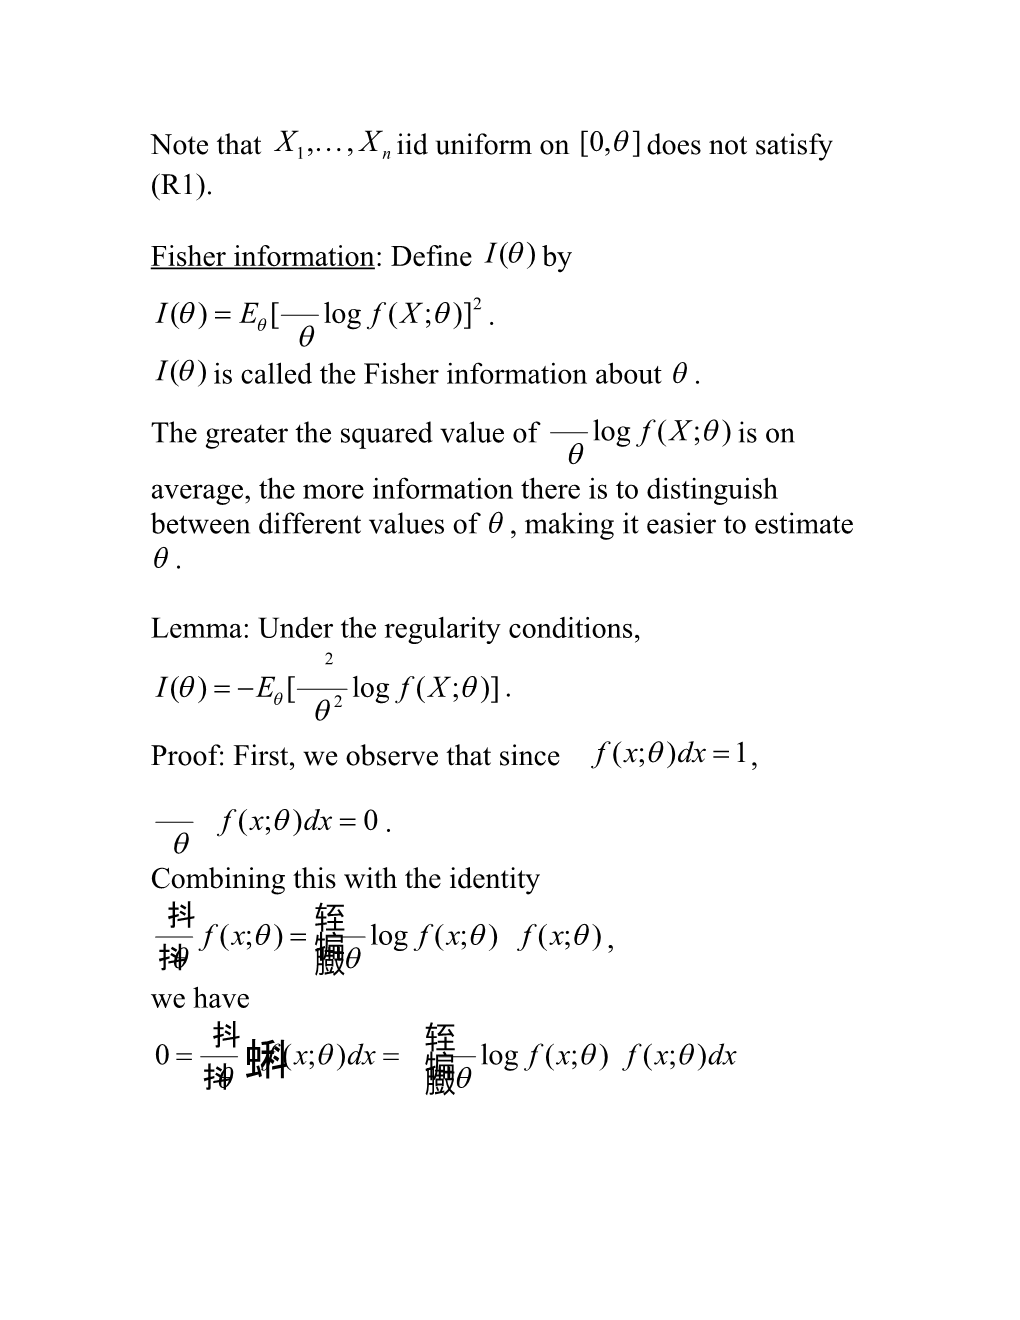 Statistics 512 Notes 14: Properties of Maximum Likelihood Estimates Continued